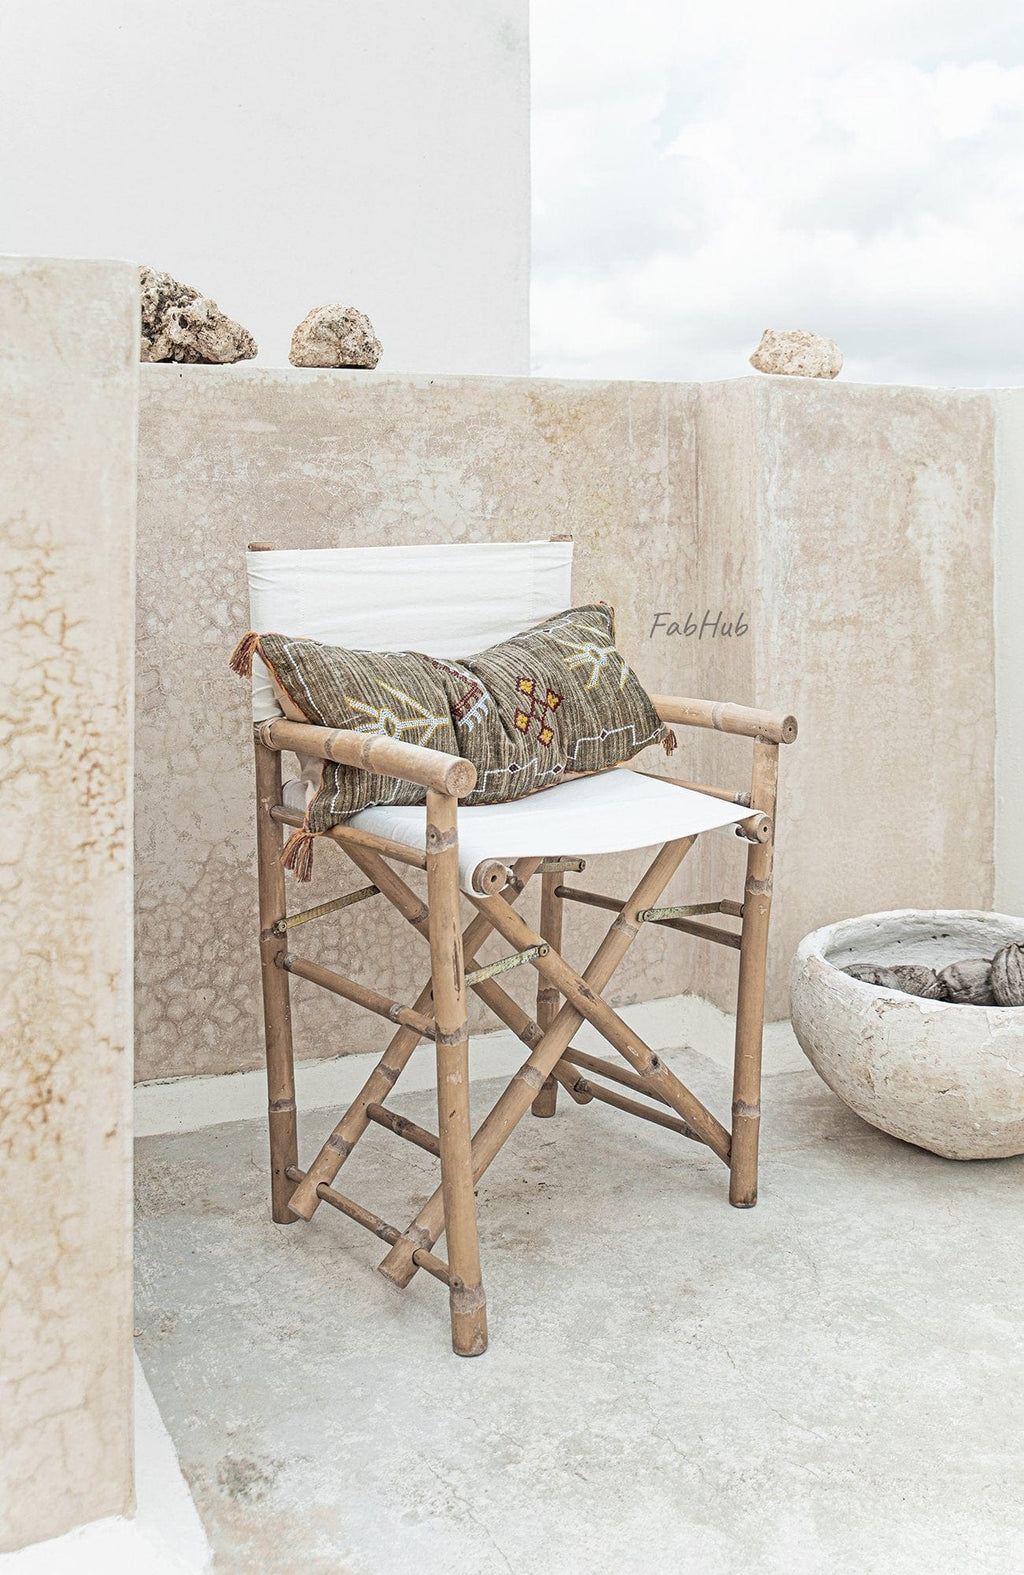 Sabra Pillow Cover Fela - Home Decor | Shop Baskets, Ceramics, Pillows, Rugs & Wall Hangs online